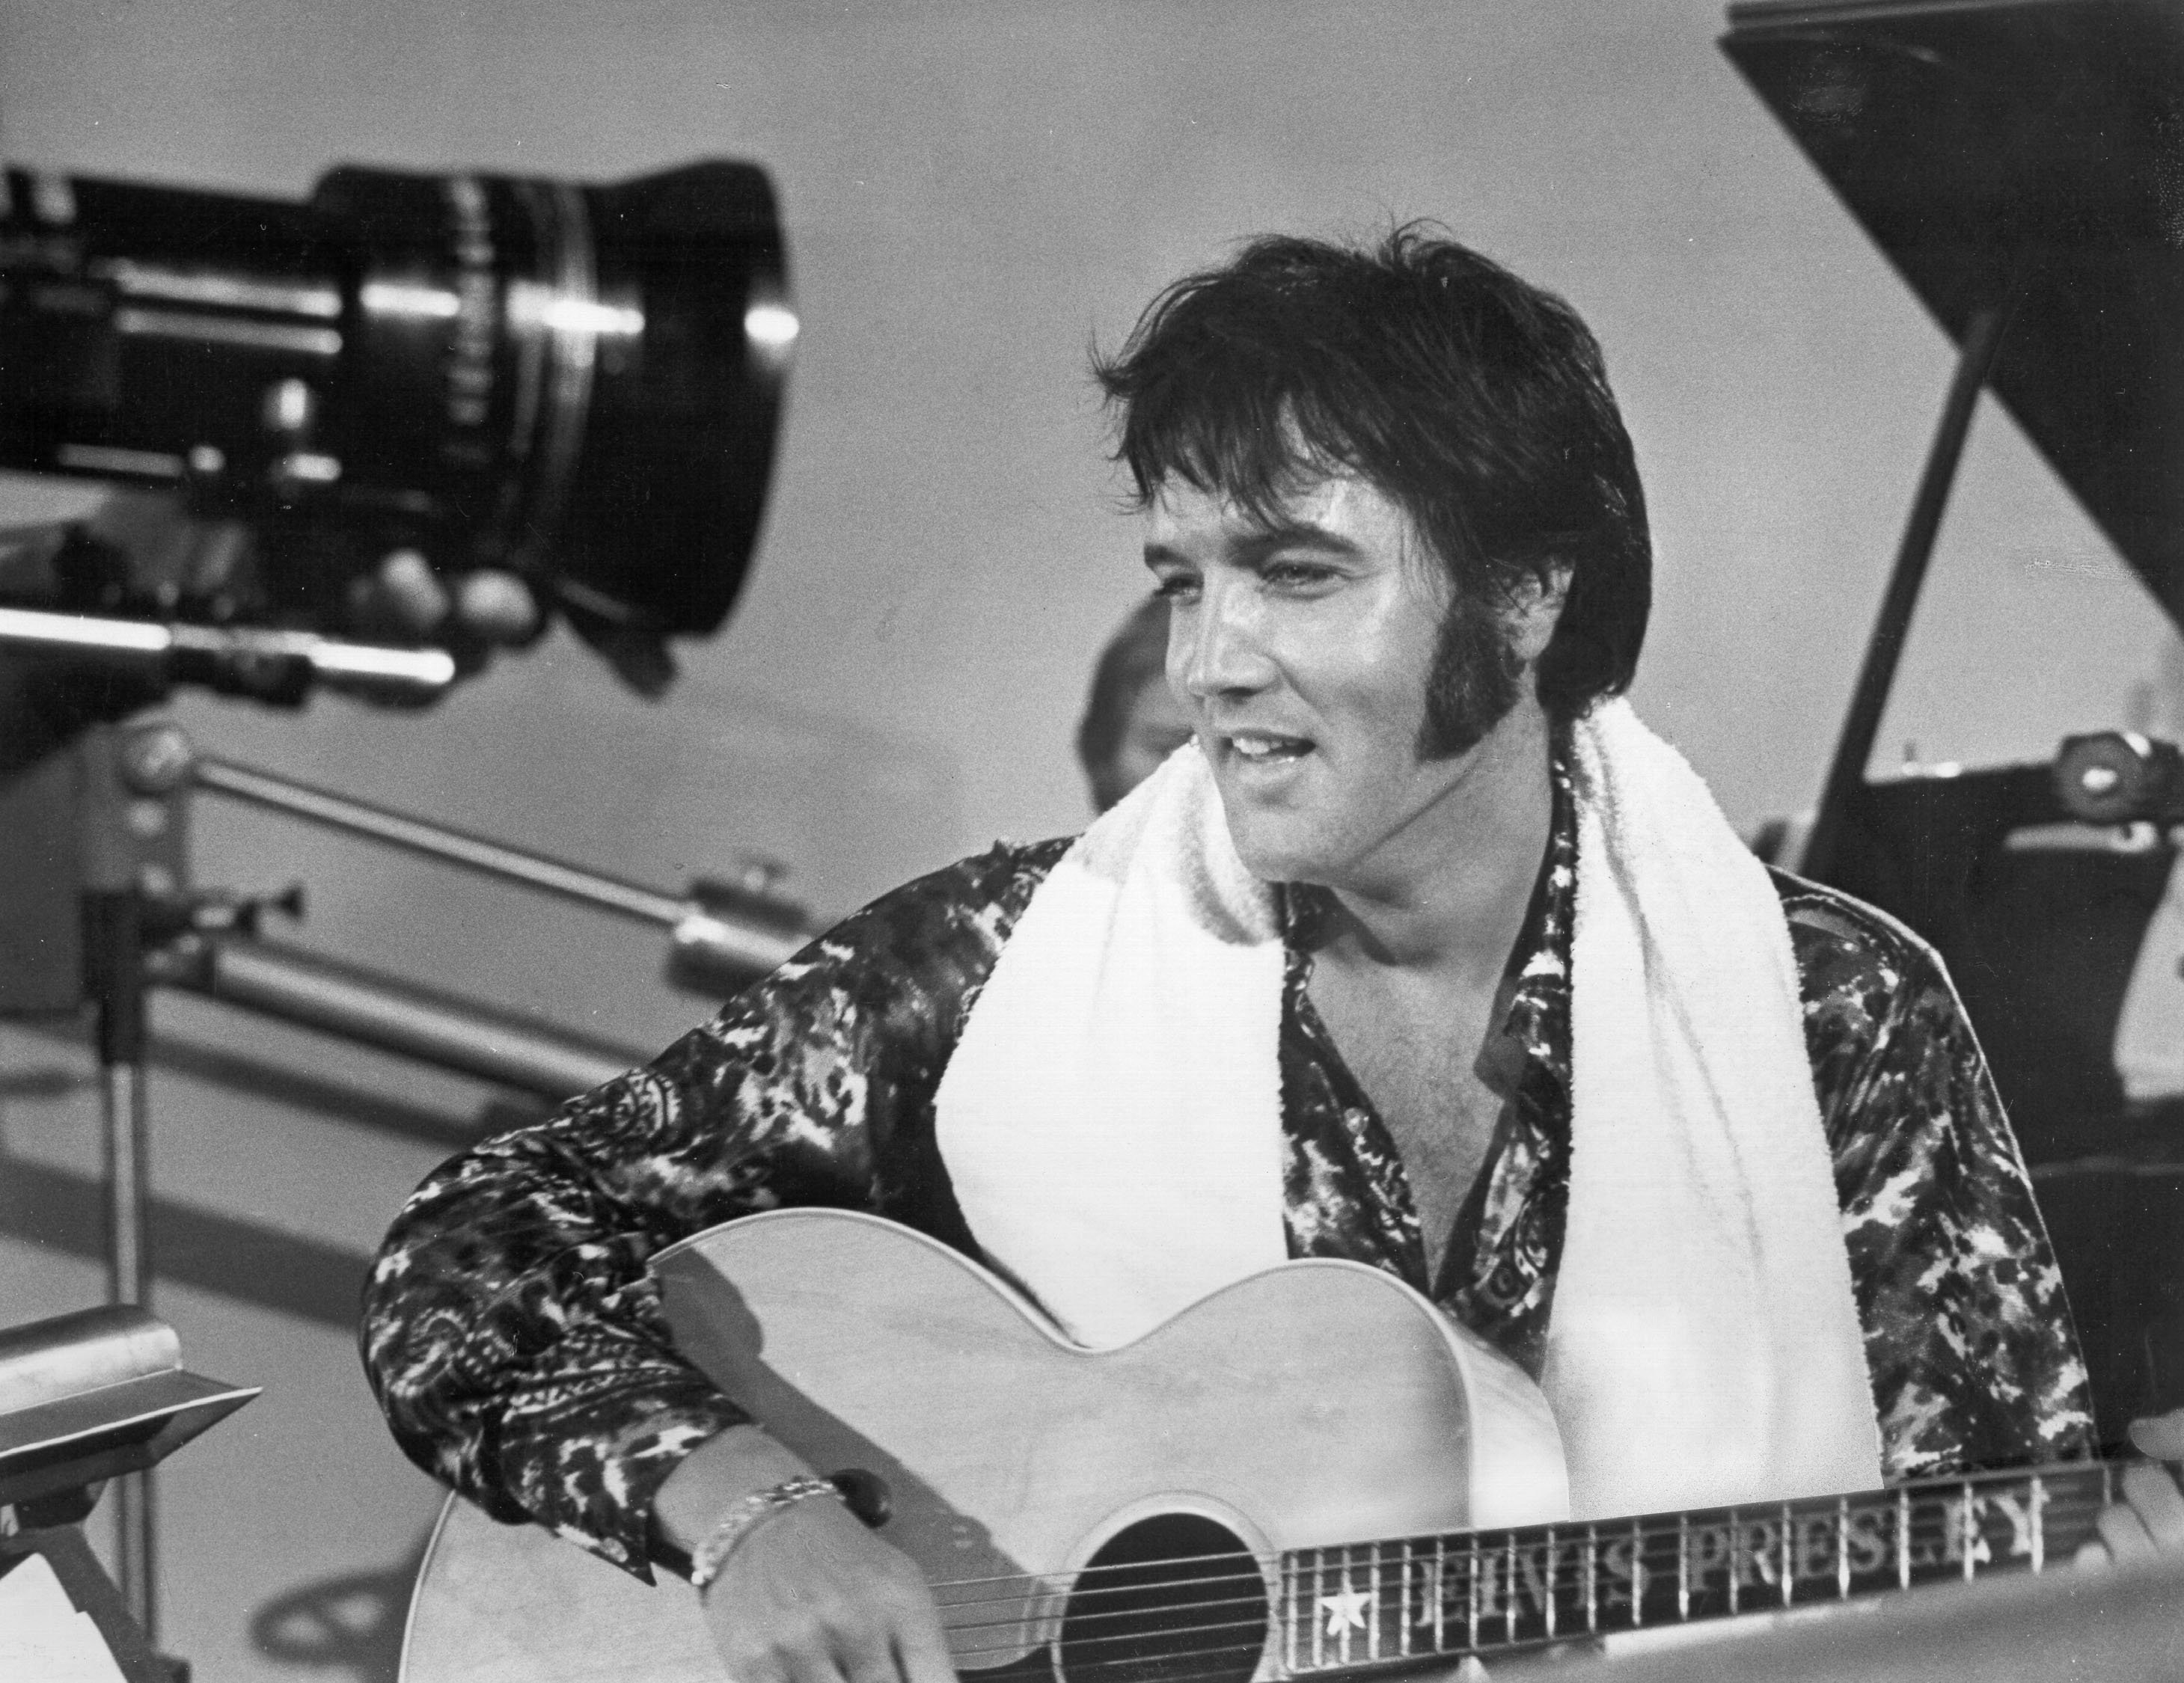 Elvis Presley with a towel around his neck